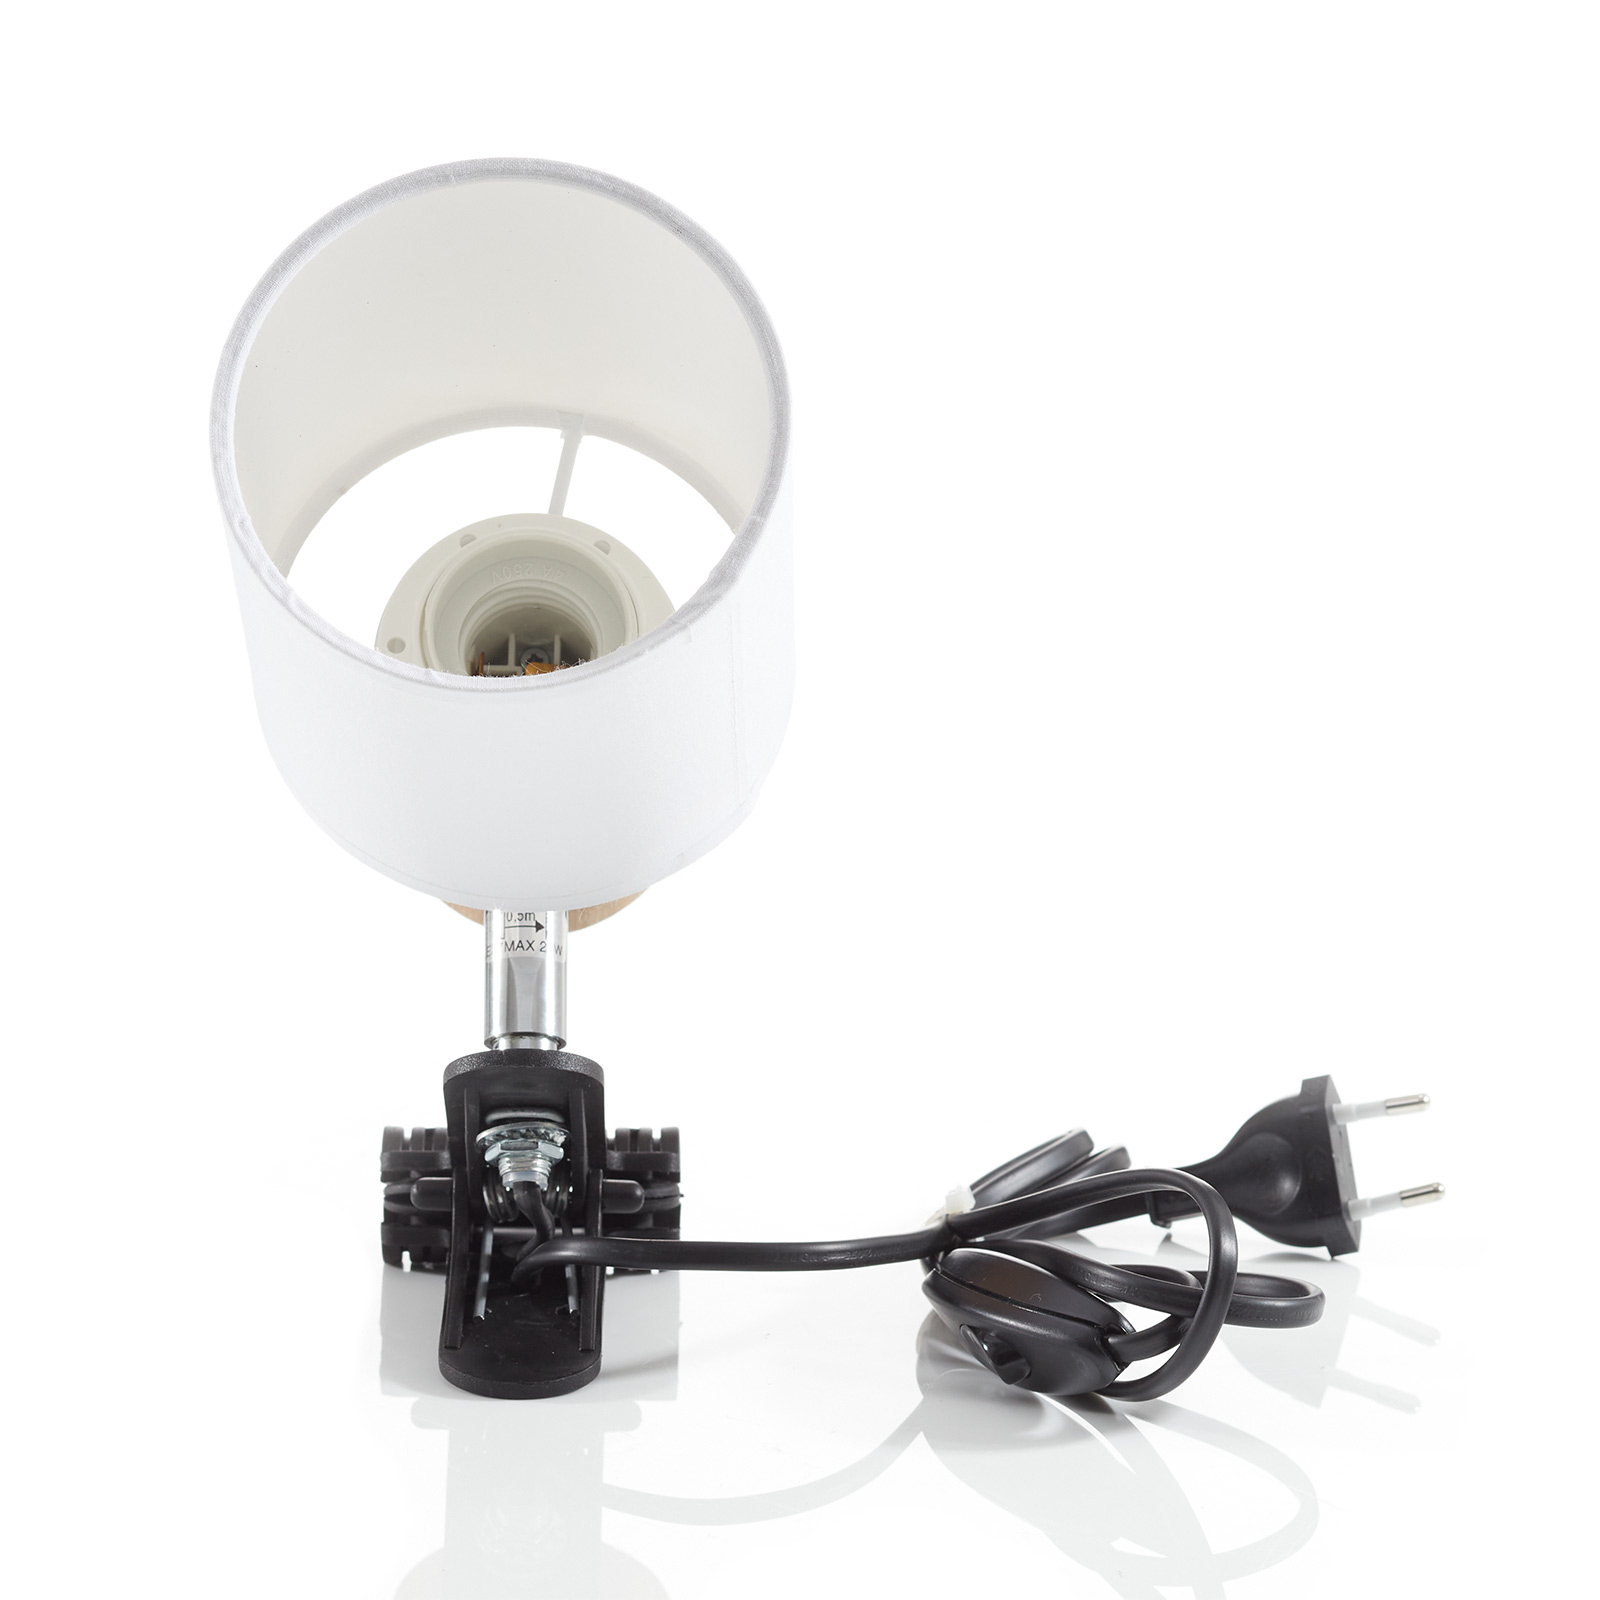 Moderne klemlamp Clampspots met witte kap